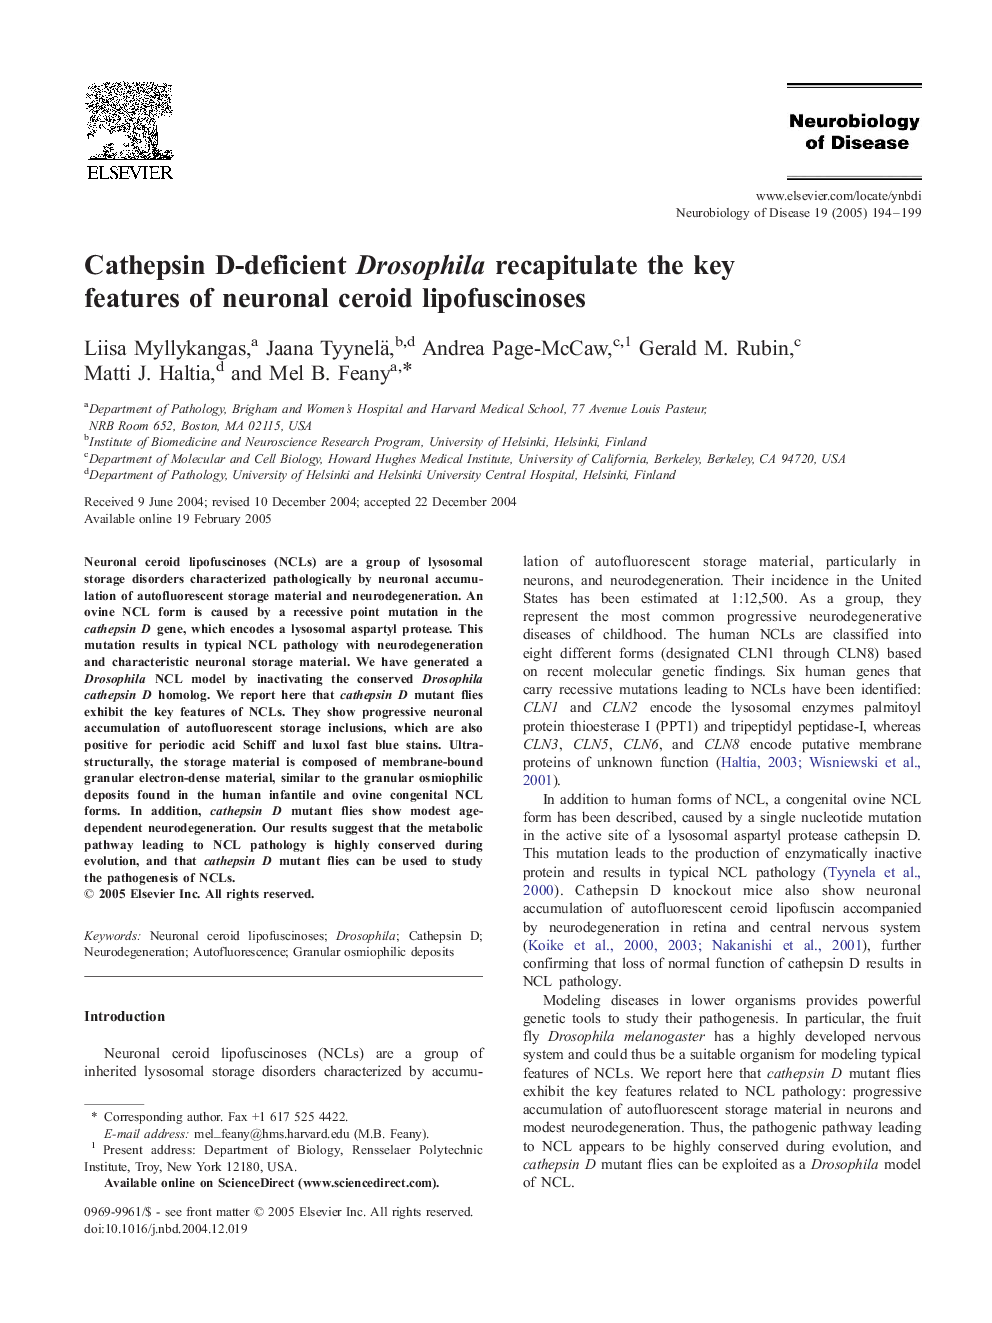 Cathepsin D-deficient Drosophila recapitulate the key features of neuronal ceroid lipofuscinoses